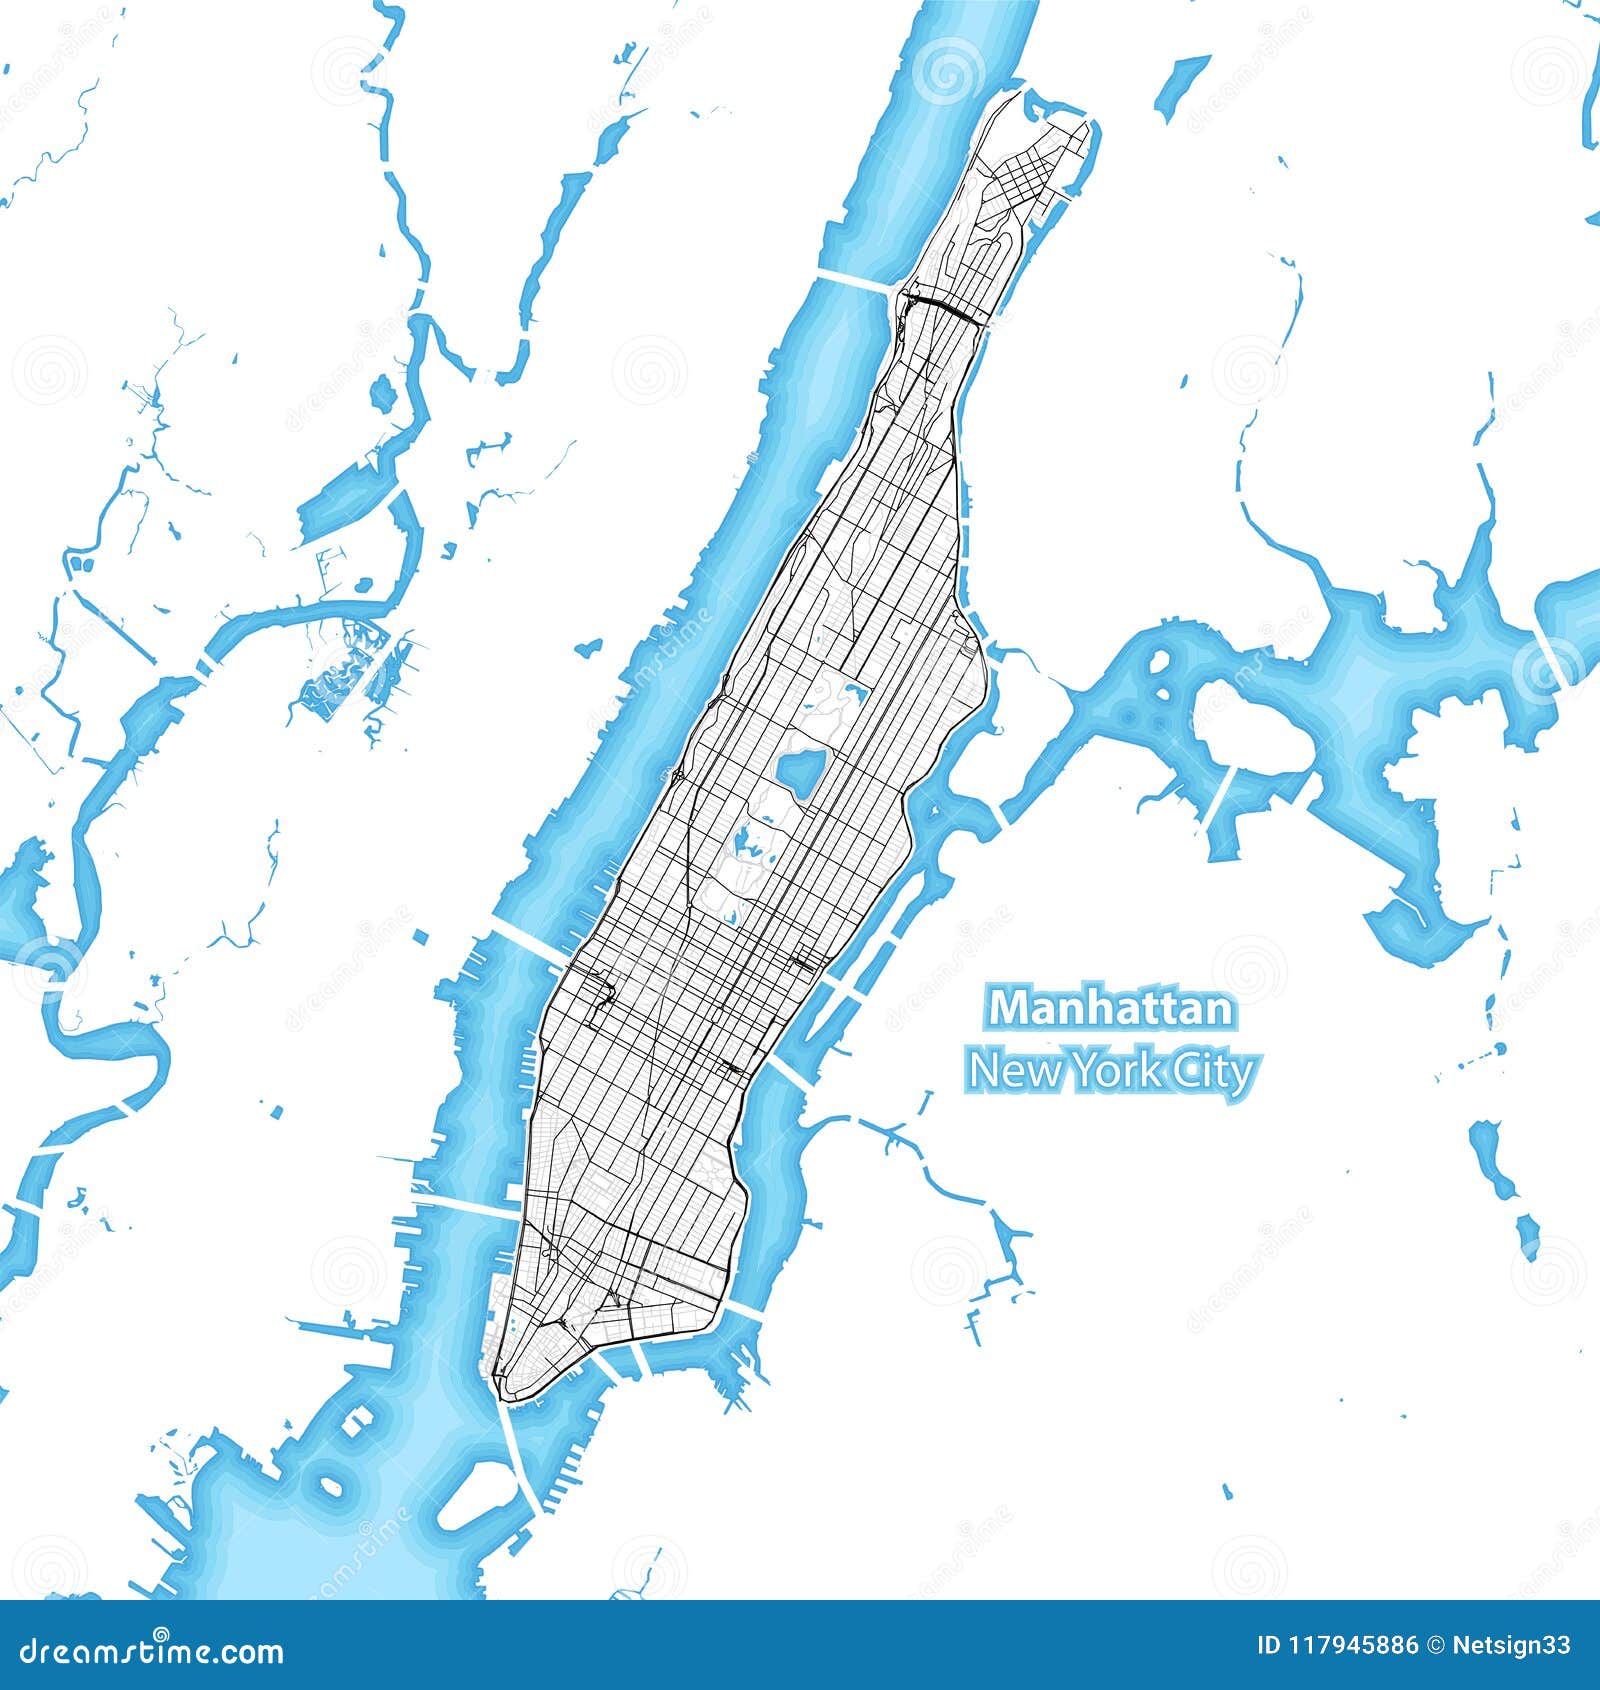 Map Island Manhattan New York City Map Island Manhattan New York City Indonesia Largest Highways 117945886 